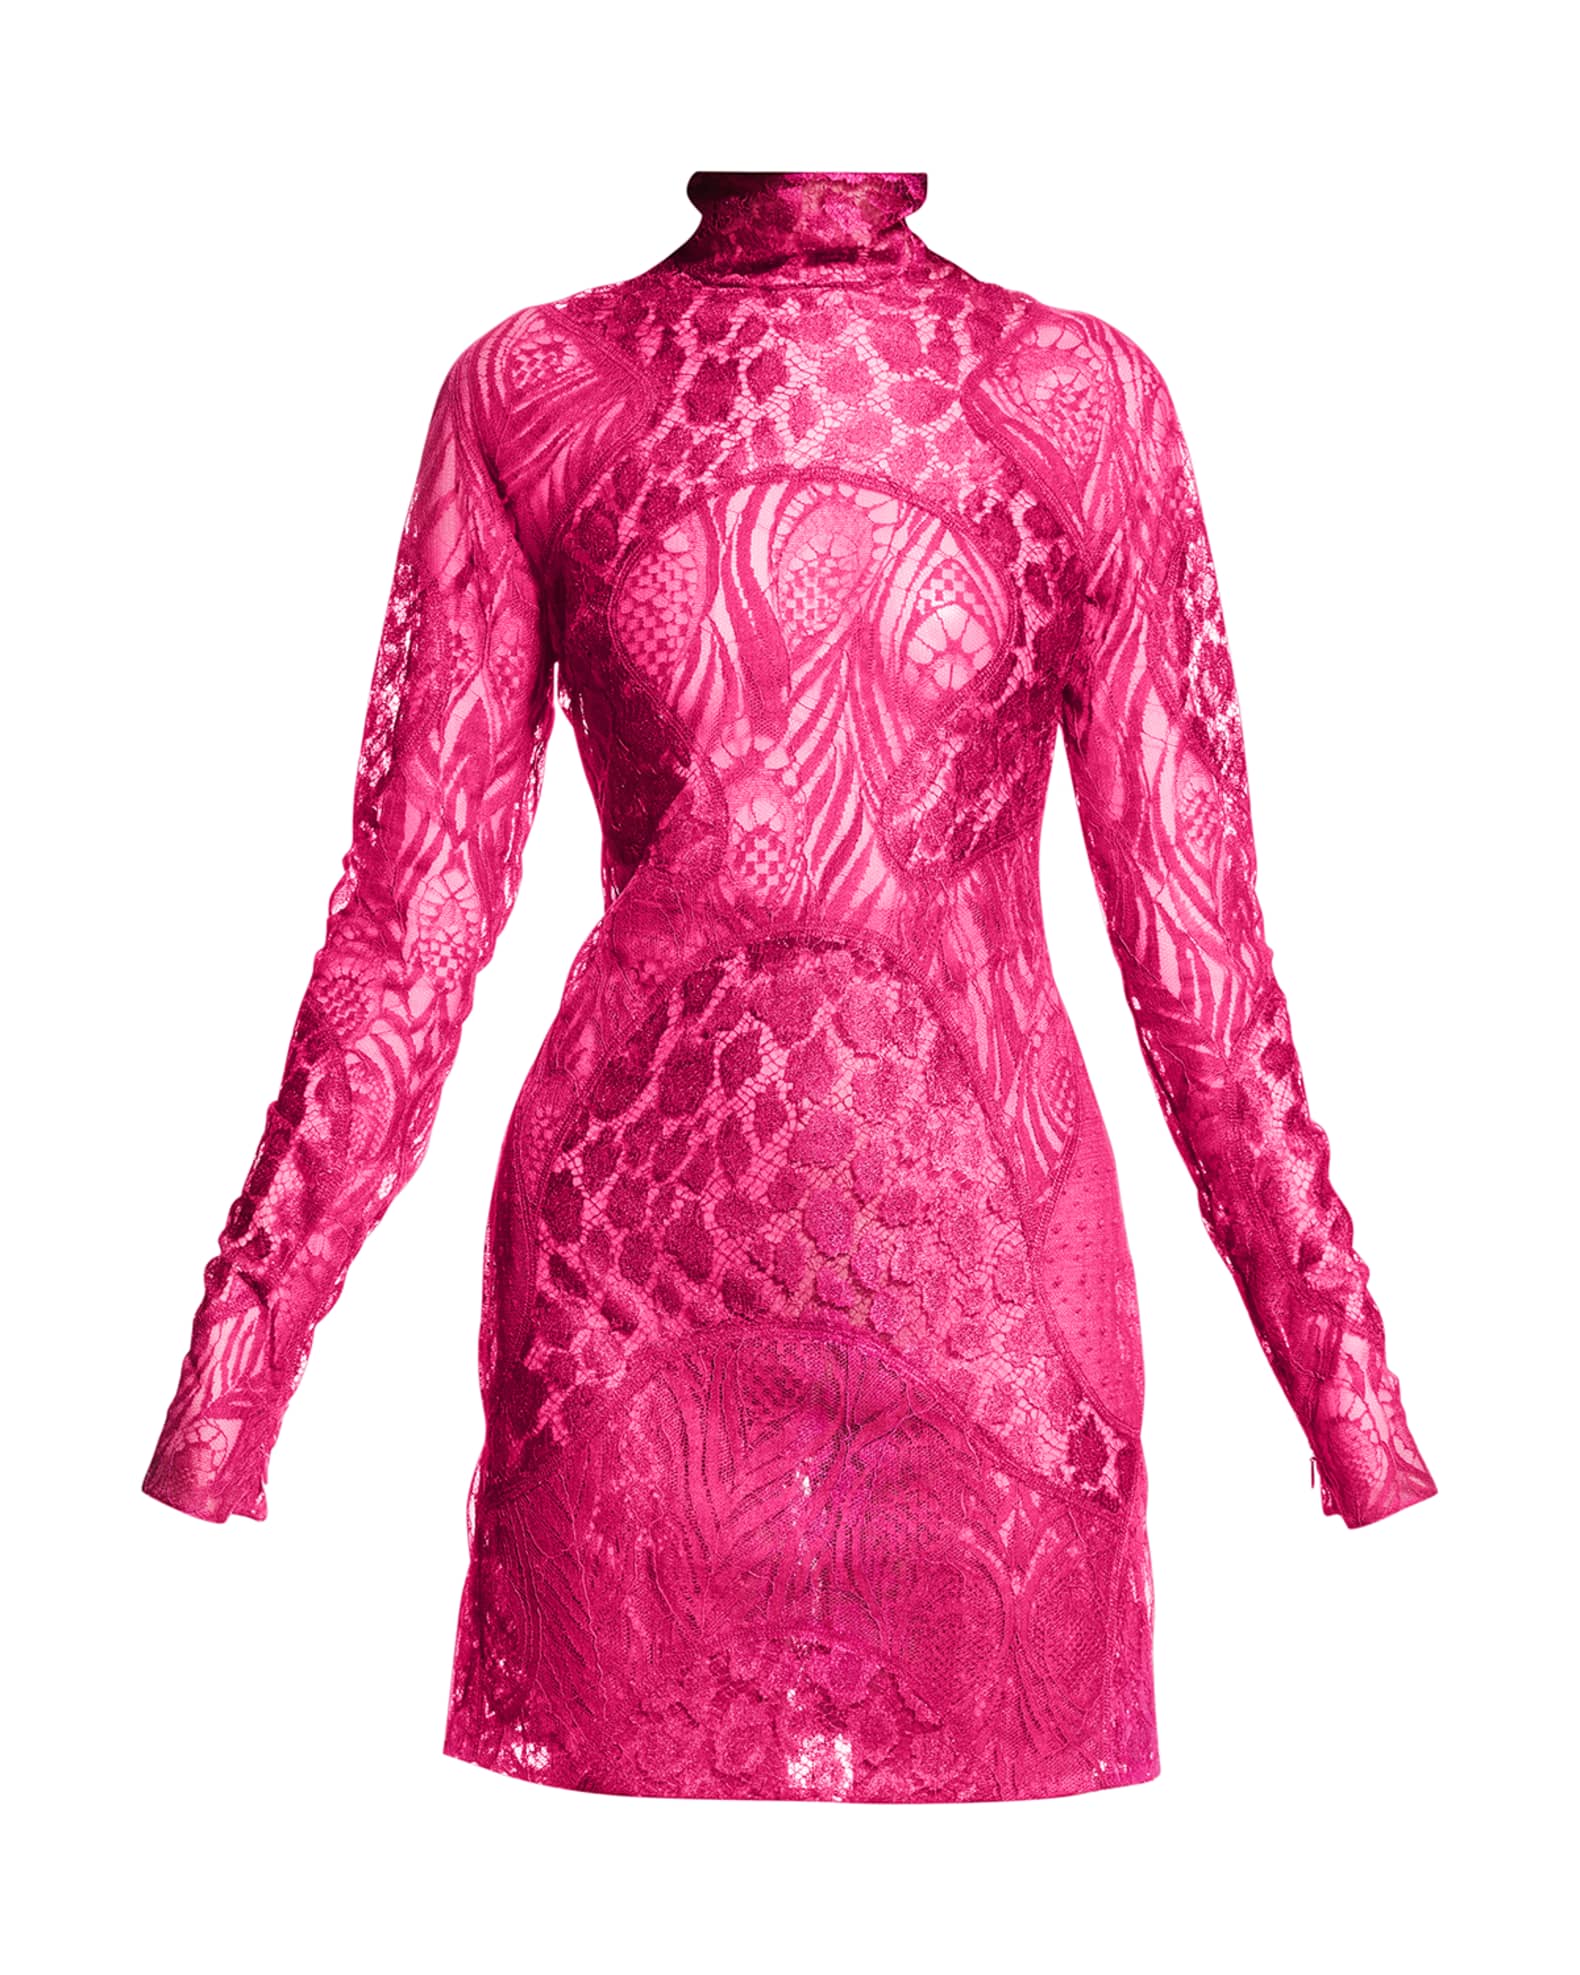 TOM FORD Mixed-Lace Mini Dress | Neiman Marcus